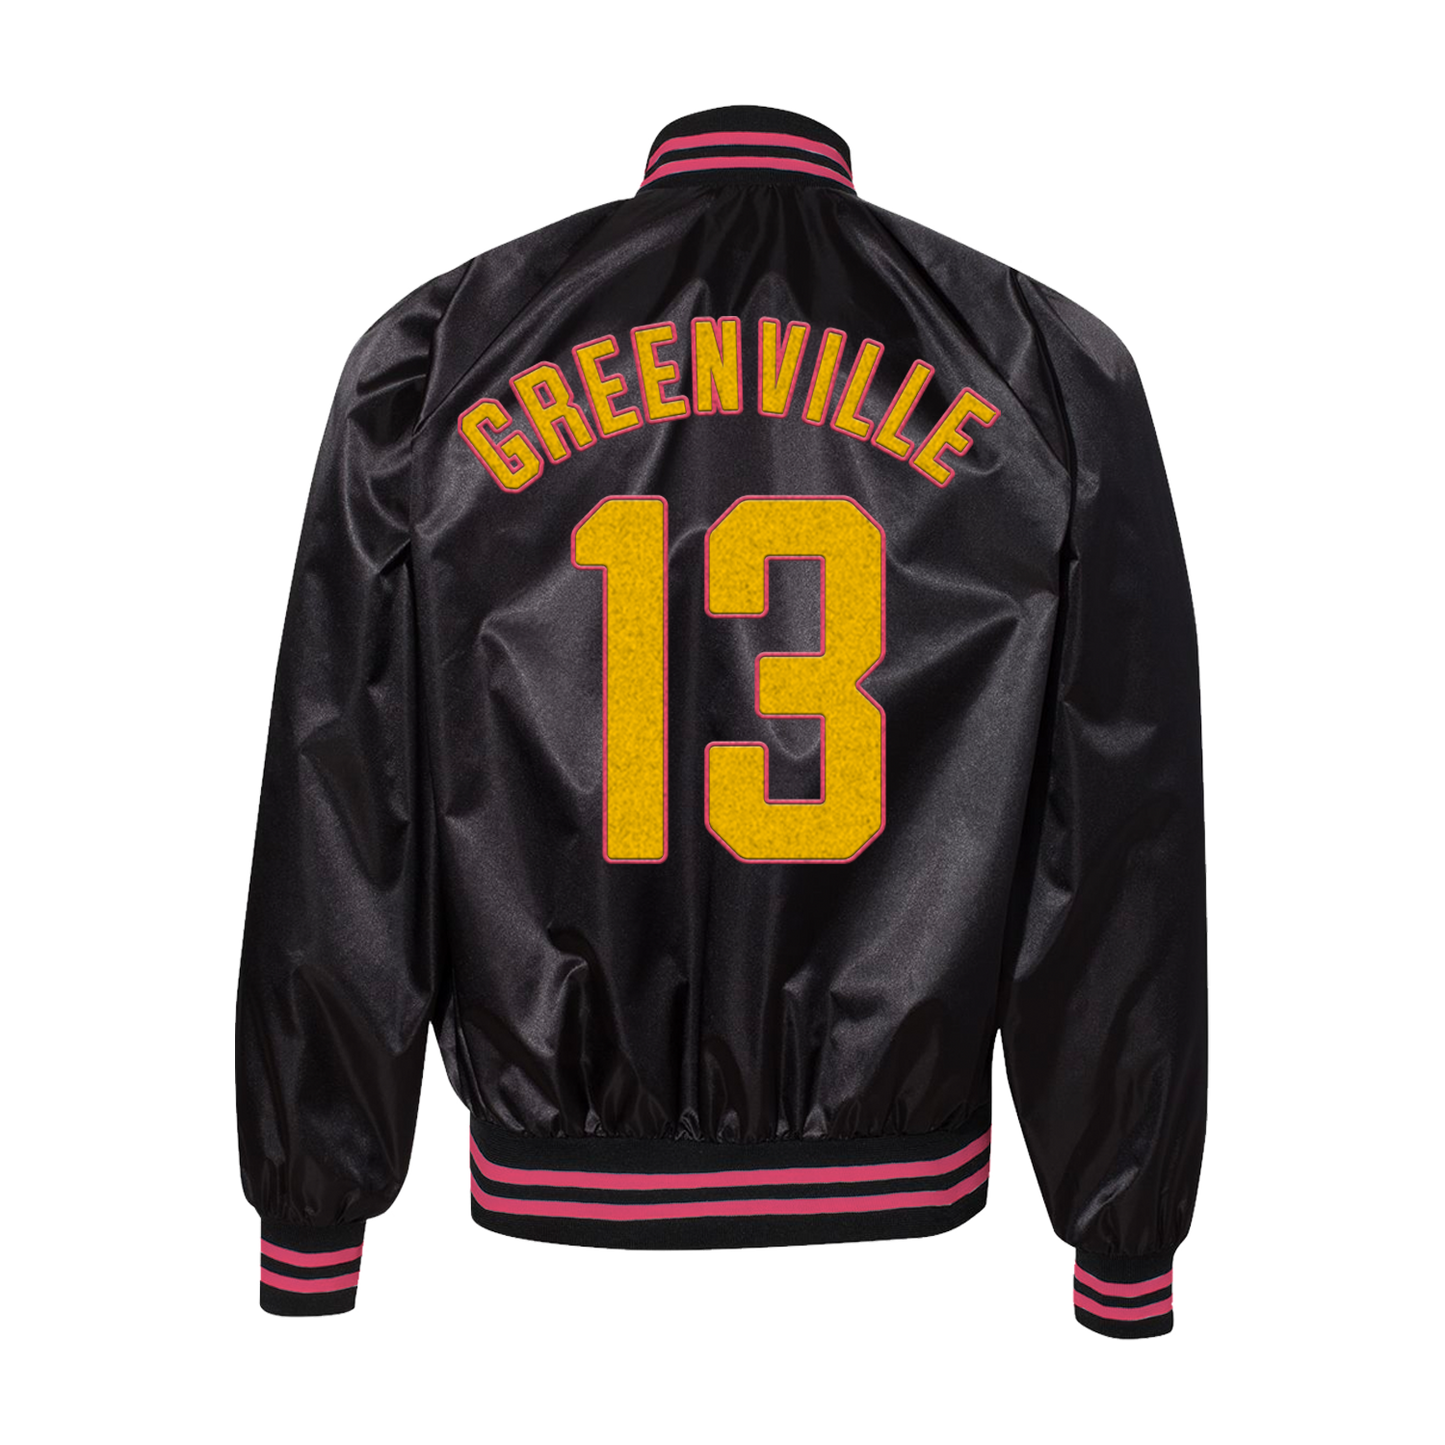 Greenville Satin Jacket